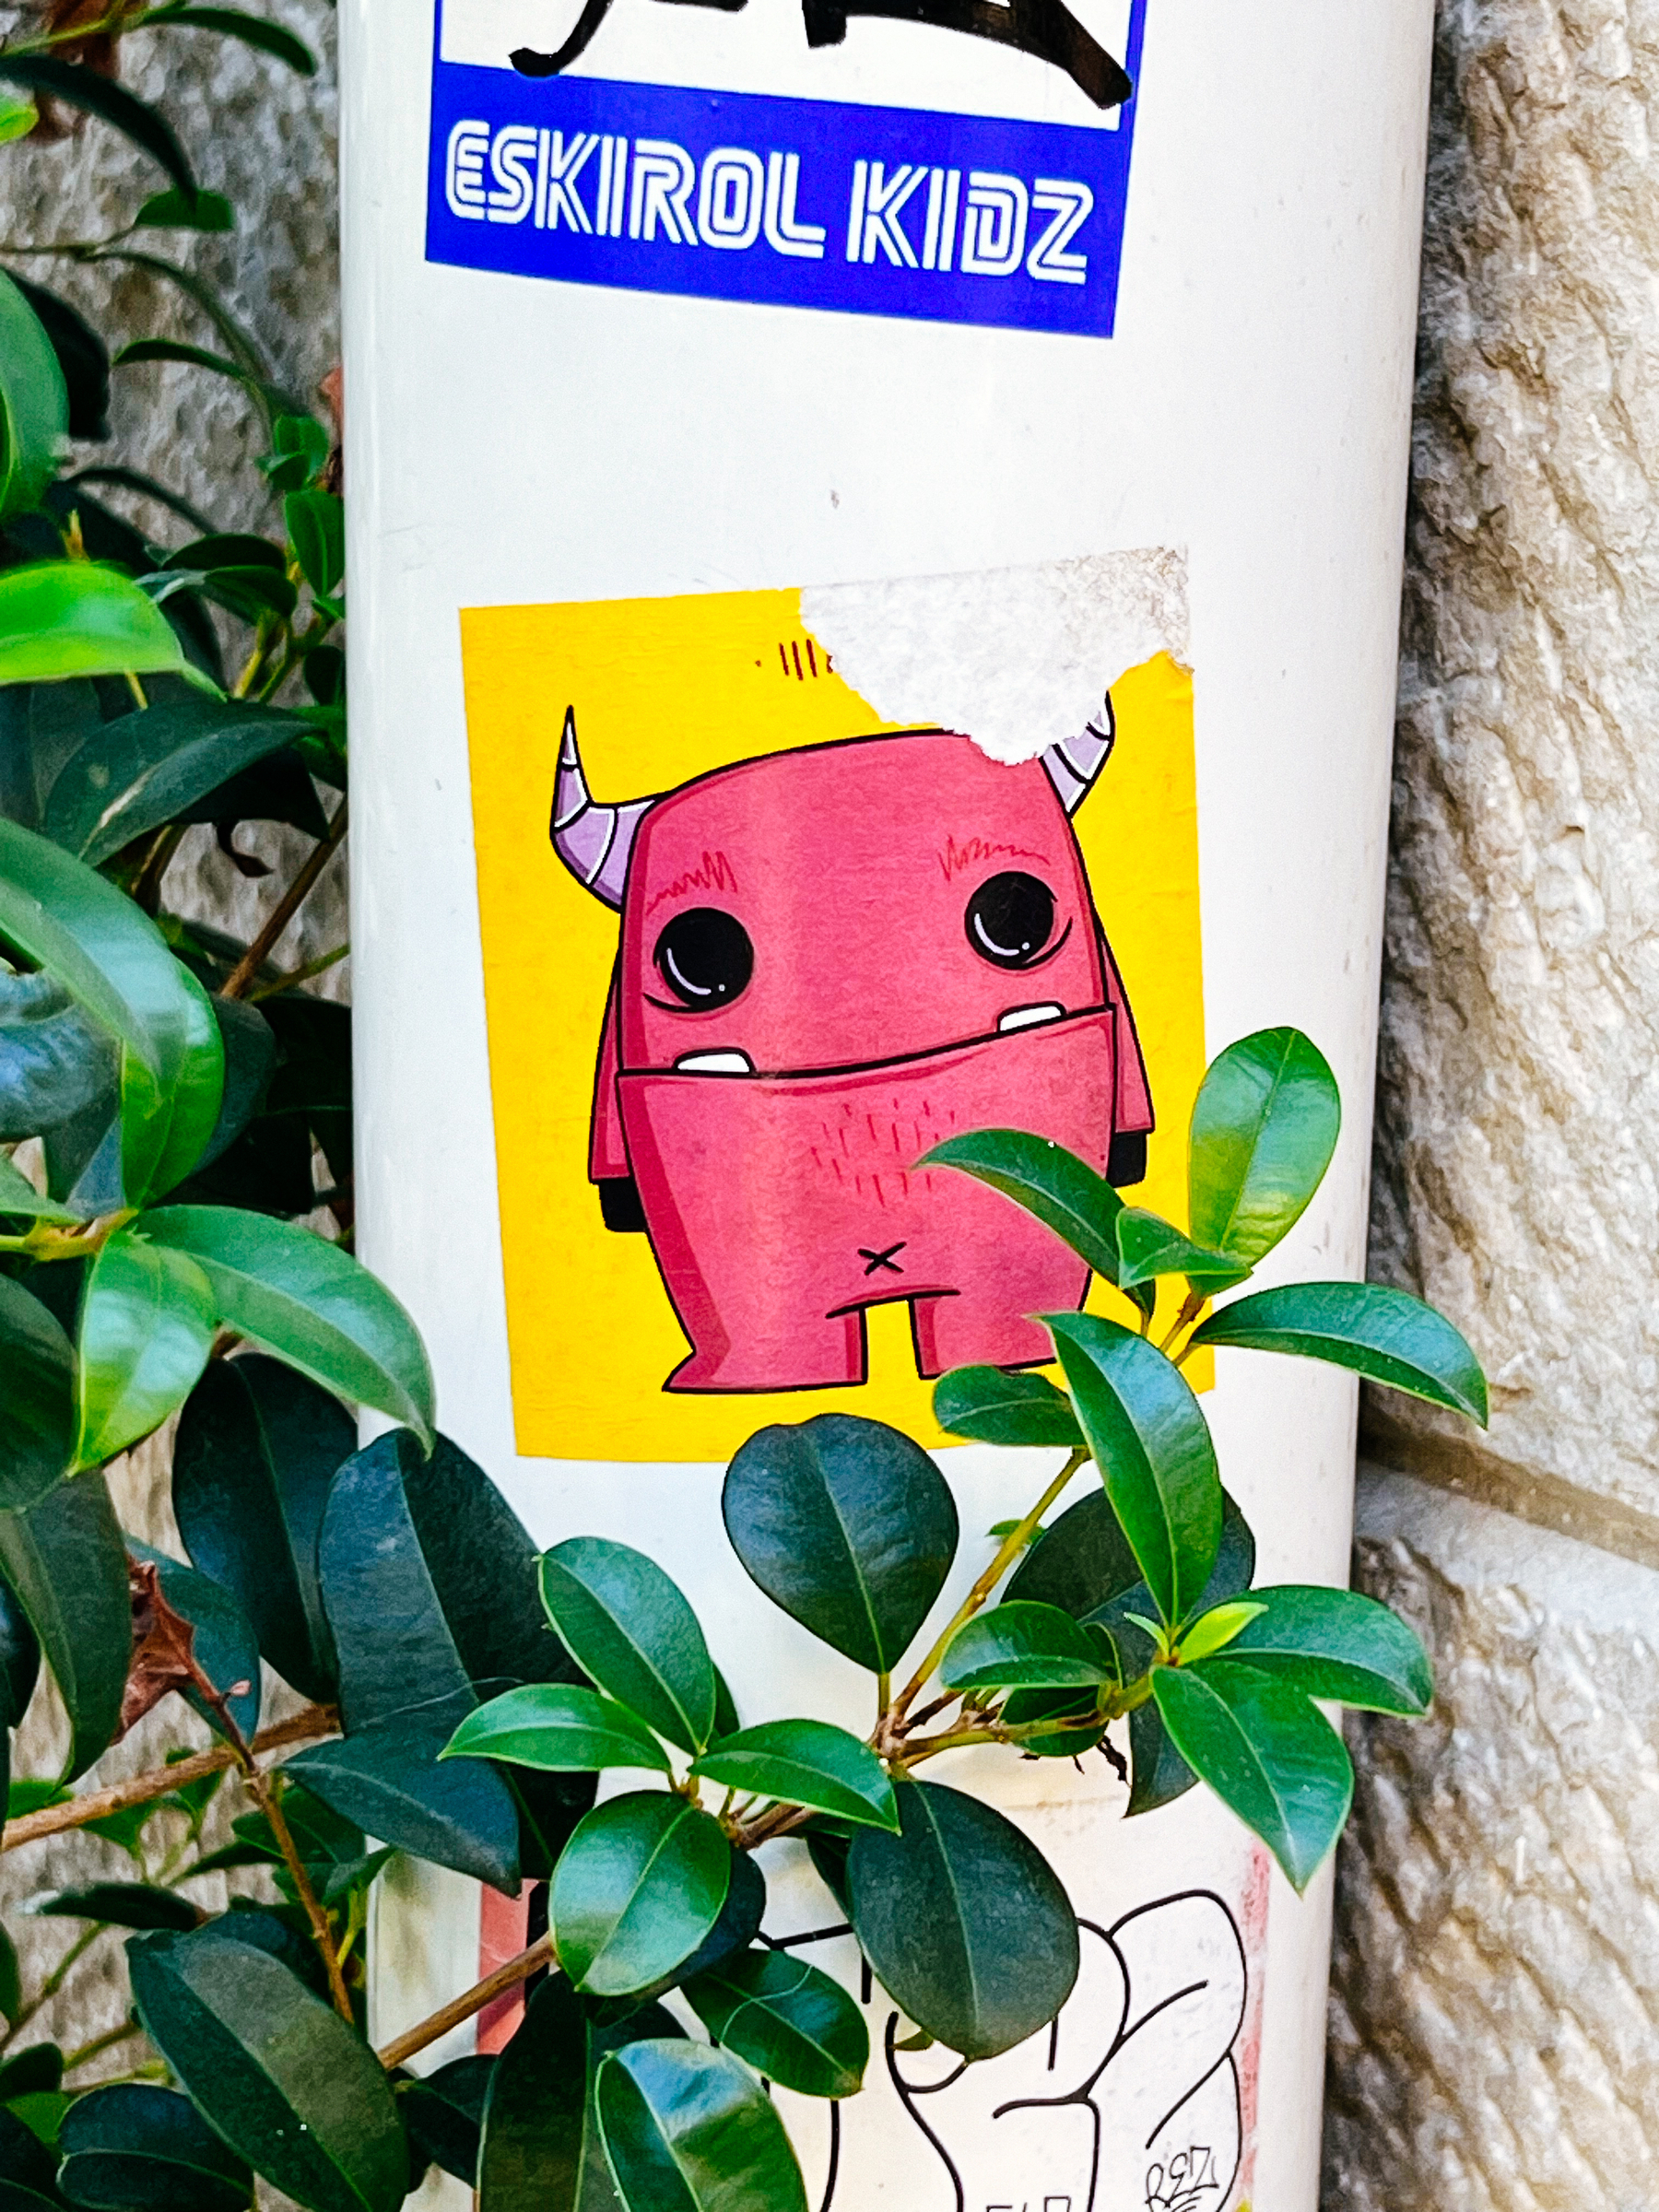 A cute pink monster in a sticker.